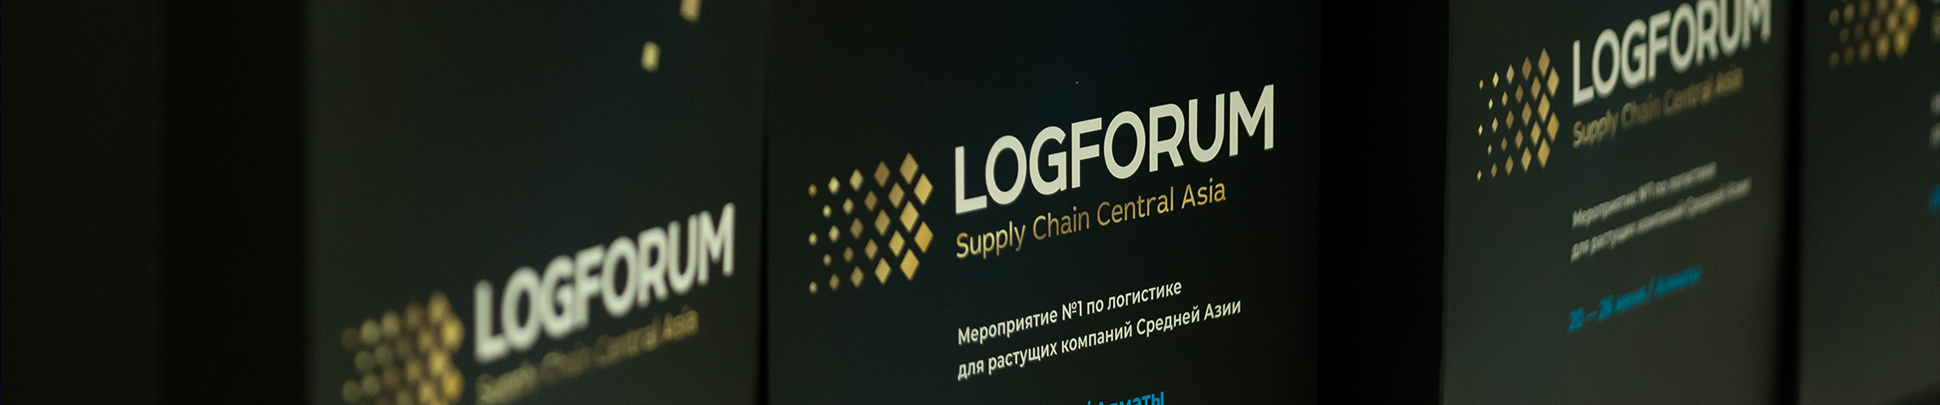 Прогнозирование продаж на LogForum Supply Chain Central Asia 2022